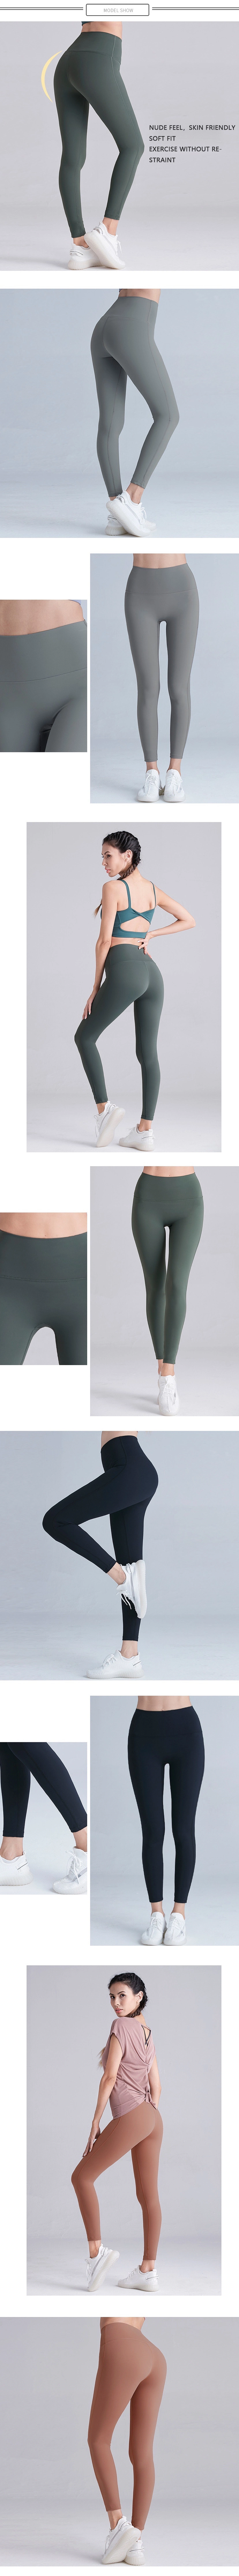 Women's High-Elastic Tight-Fitting Hip-Fitting Pants Running Sports Fitness Yoga Pants